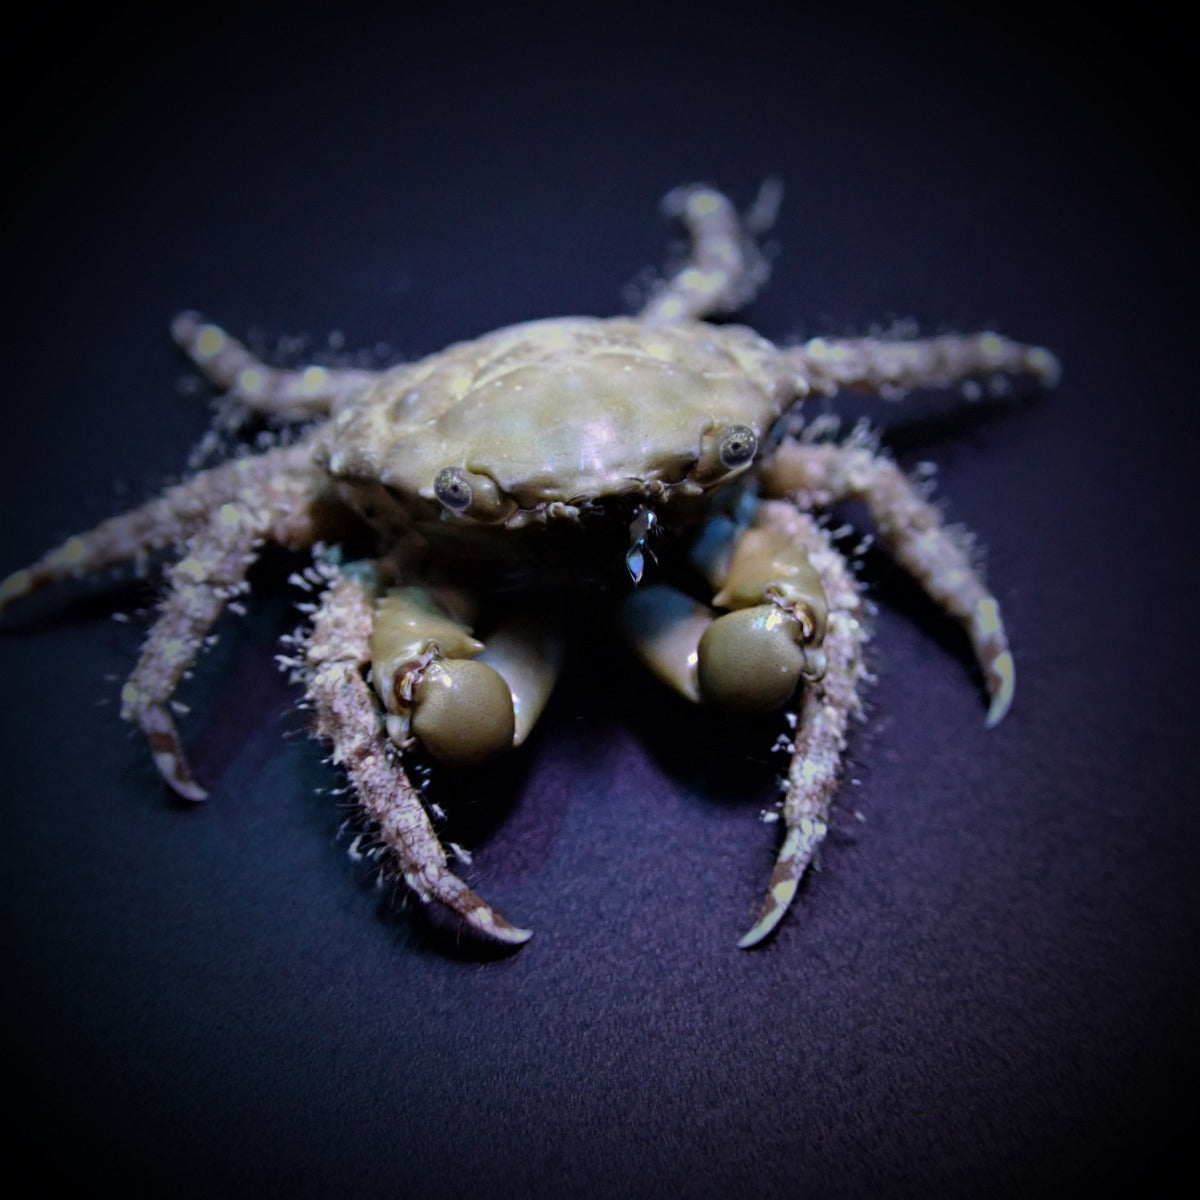 Mithrax sculptus - Emerald crab